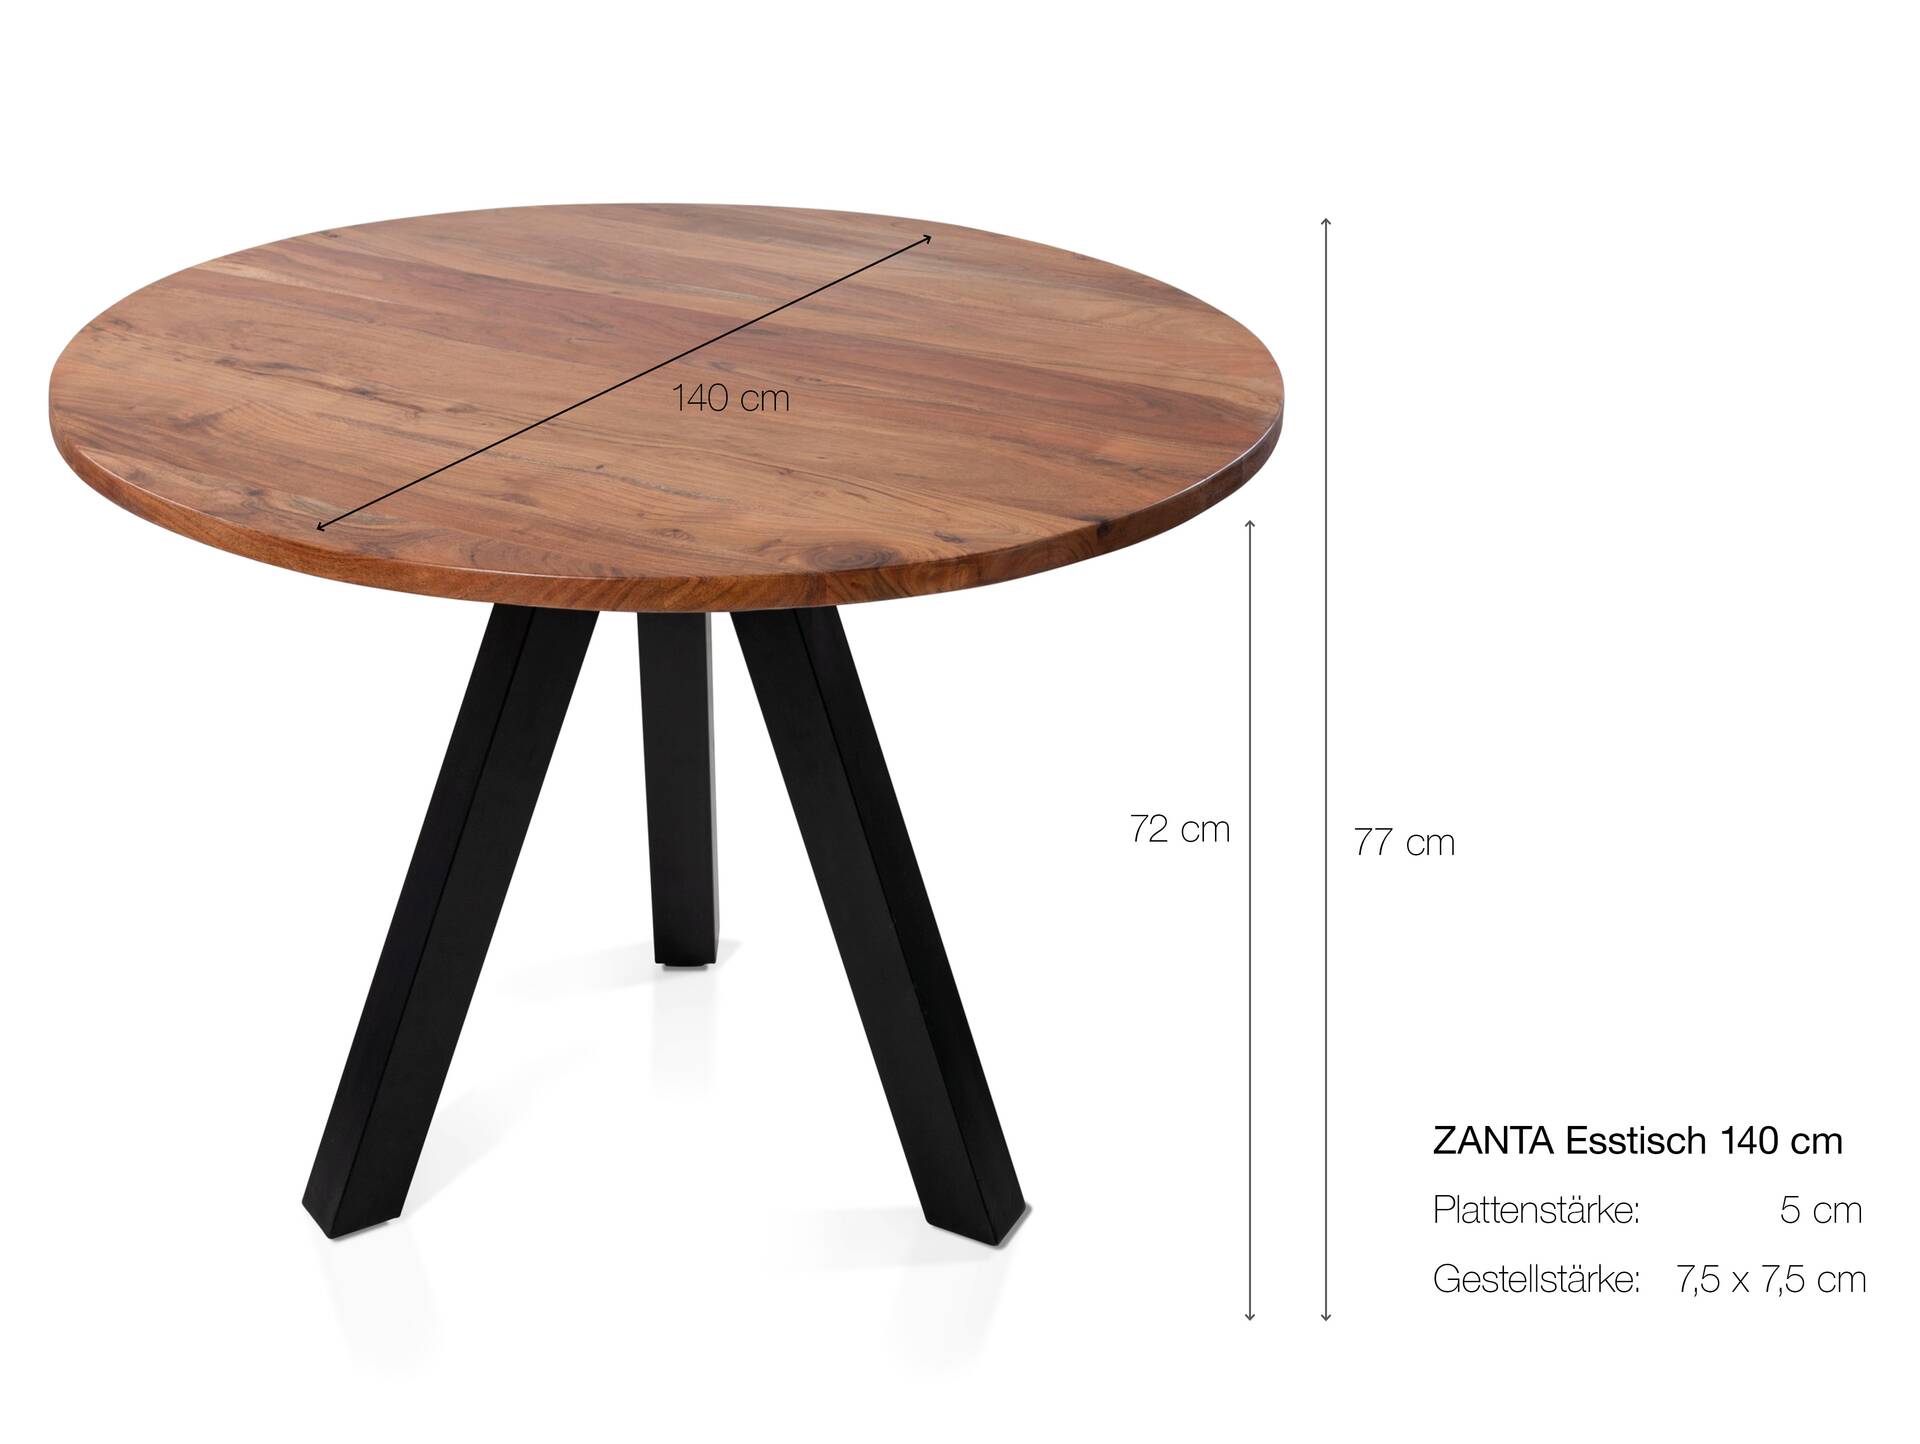 ZANTA Esstisch, Platte: 5 cm, Material Massivholz, Akazienholz 140 cm